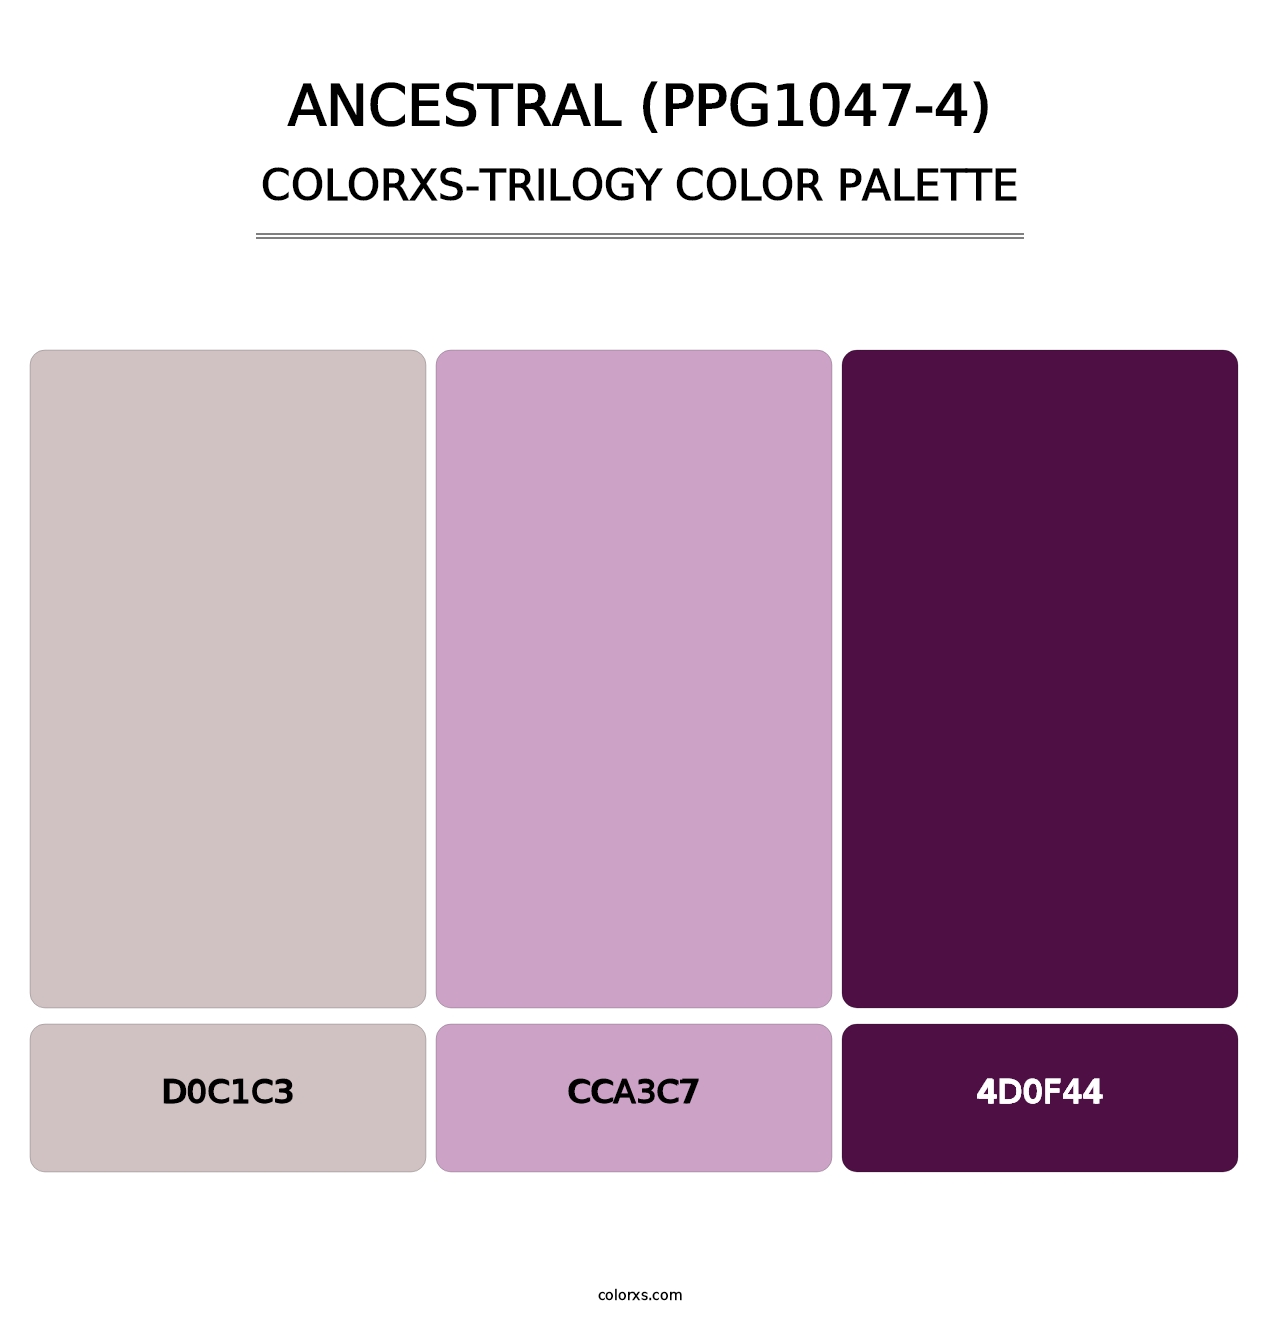 Ancestral (PPG1047-4) - Colorxs Trilogy Palette